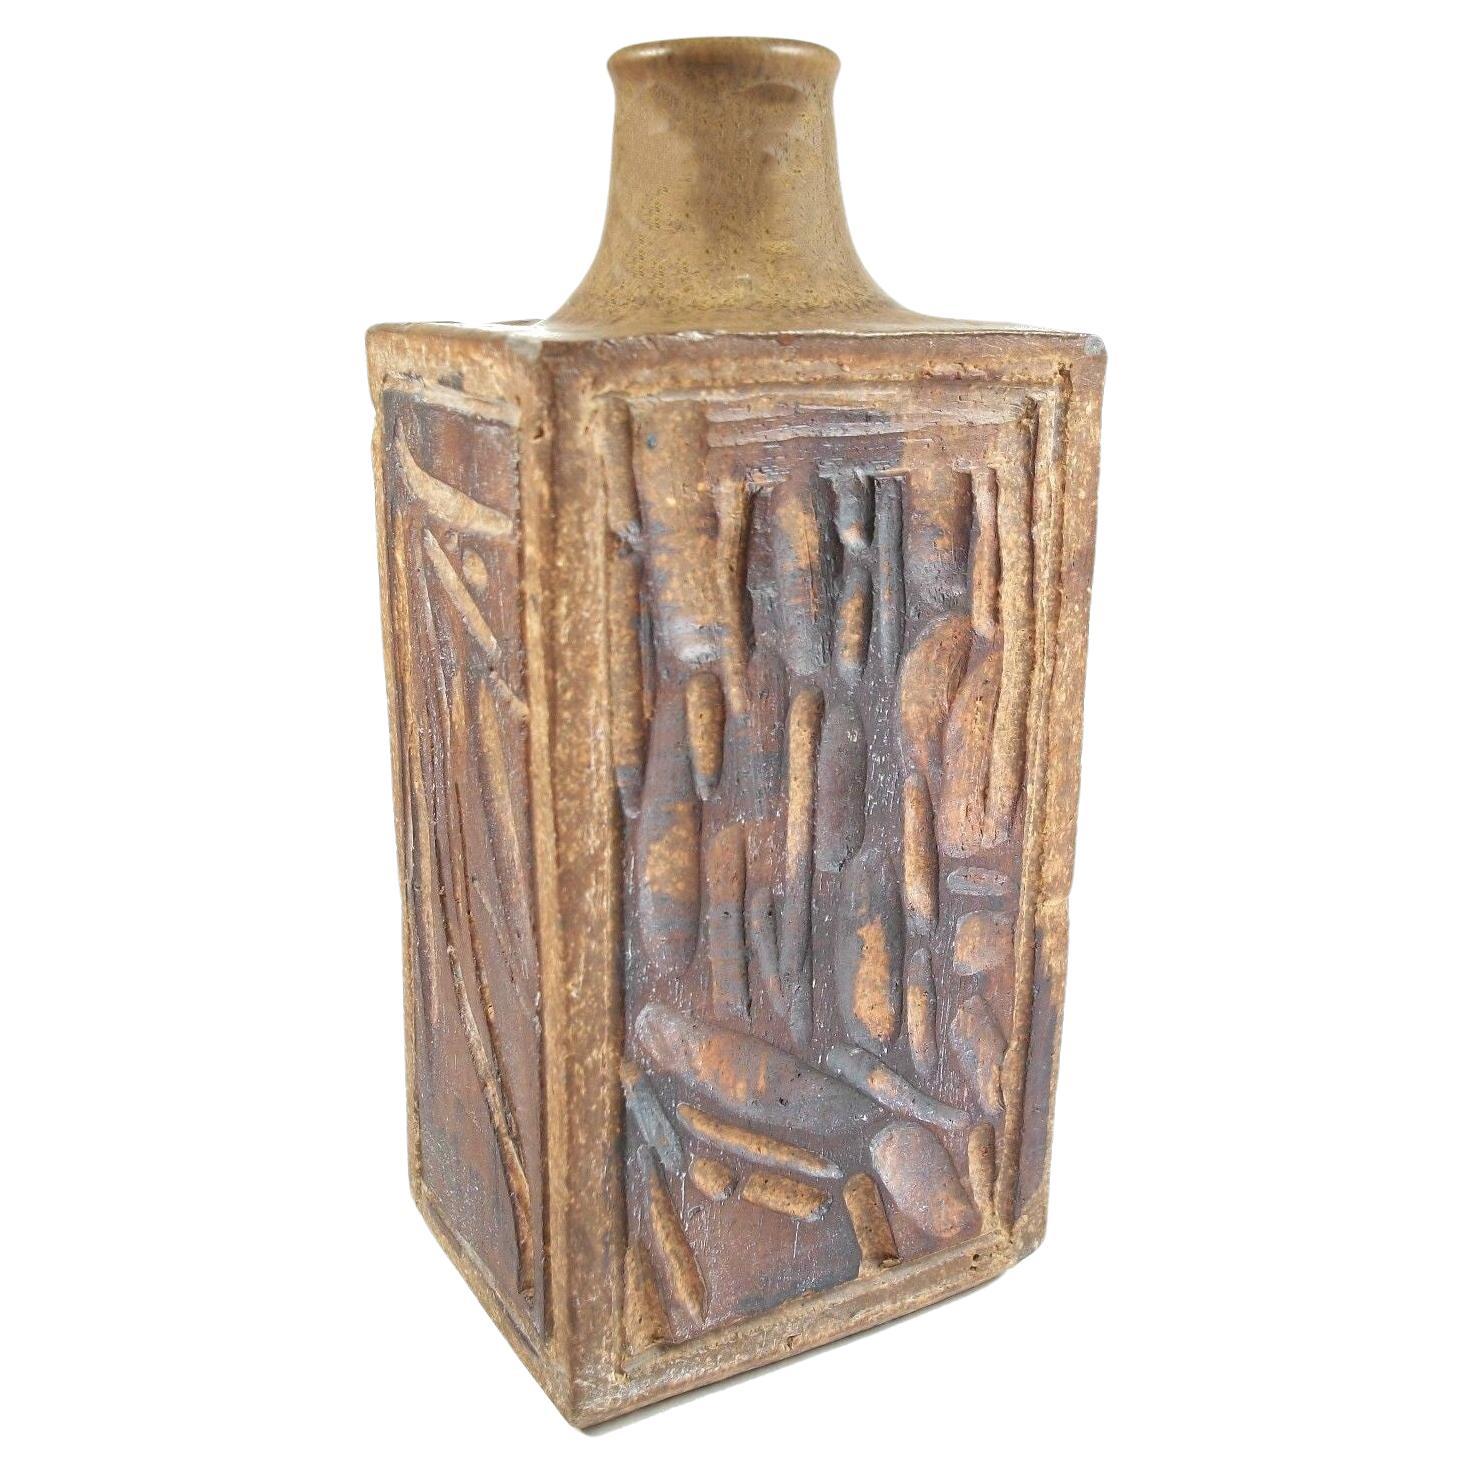 VILT - Cut-Sided & Glazed Stoneware Studio Pottery Vase - Signed - 20th Century